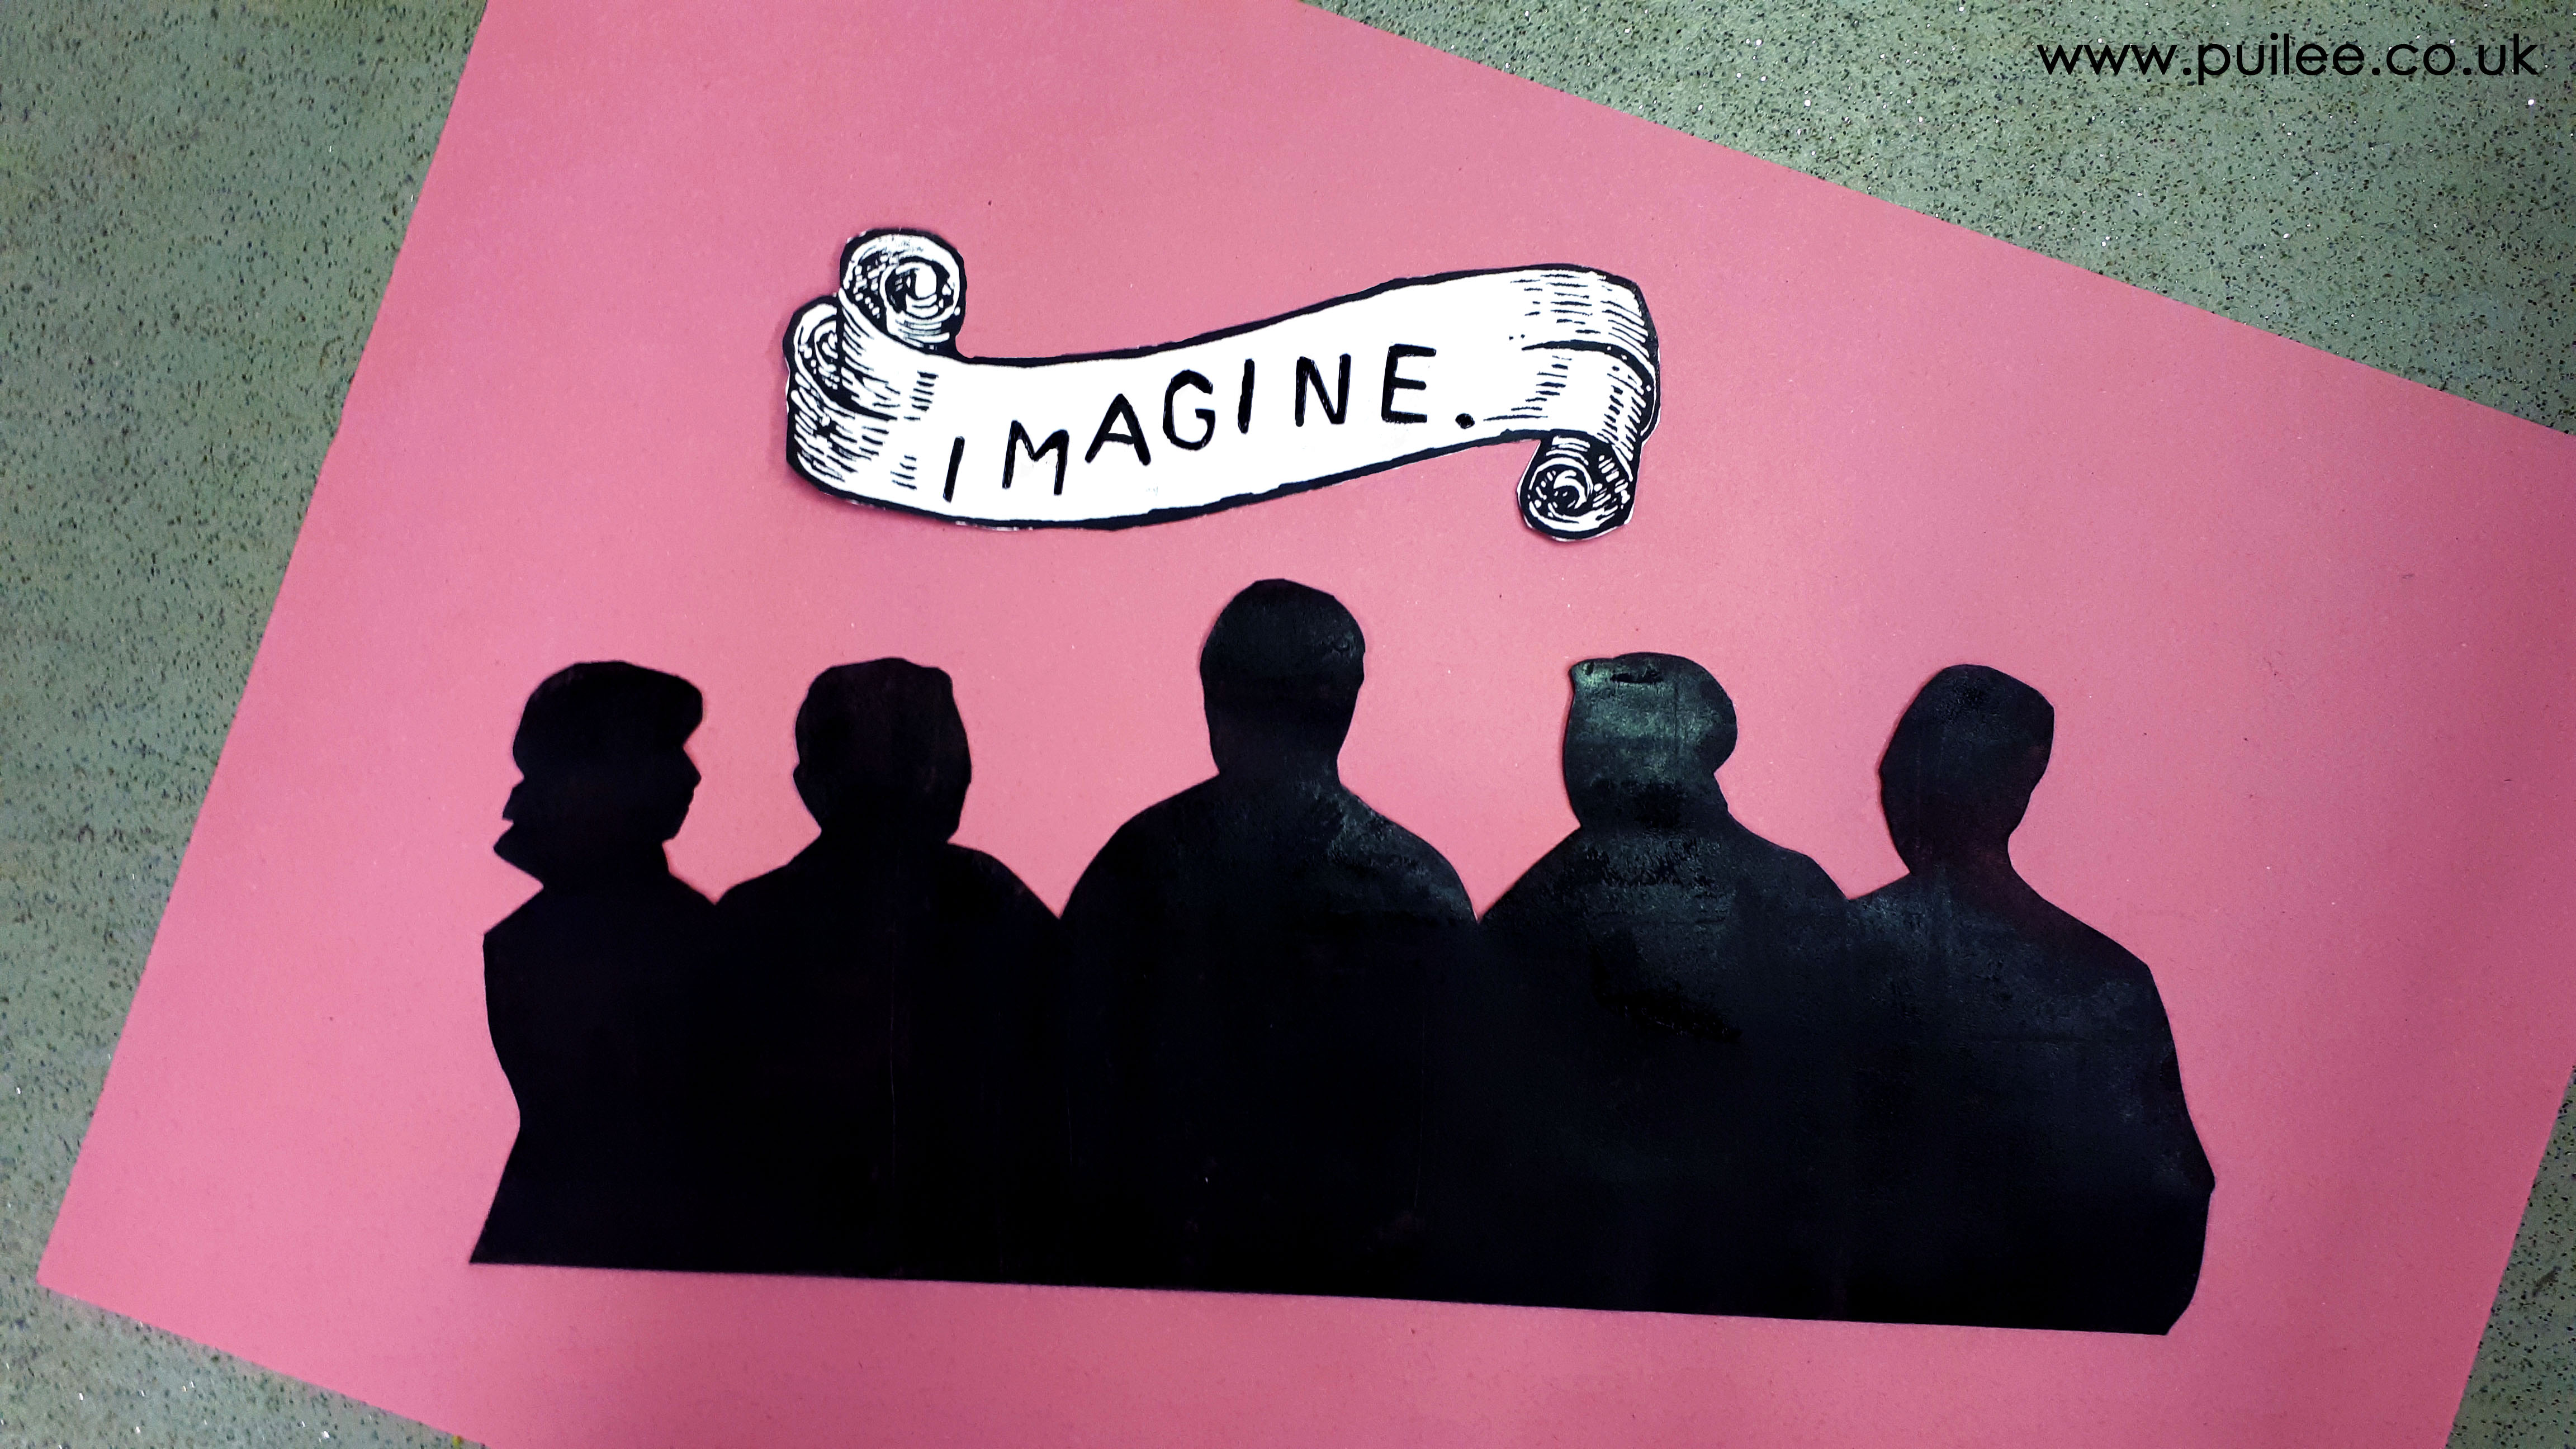 Imagine (2019) screenprint (made with hand-cut stencils) onto paper - Artist Pui Lee